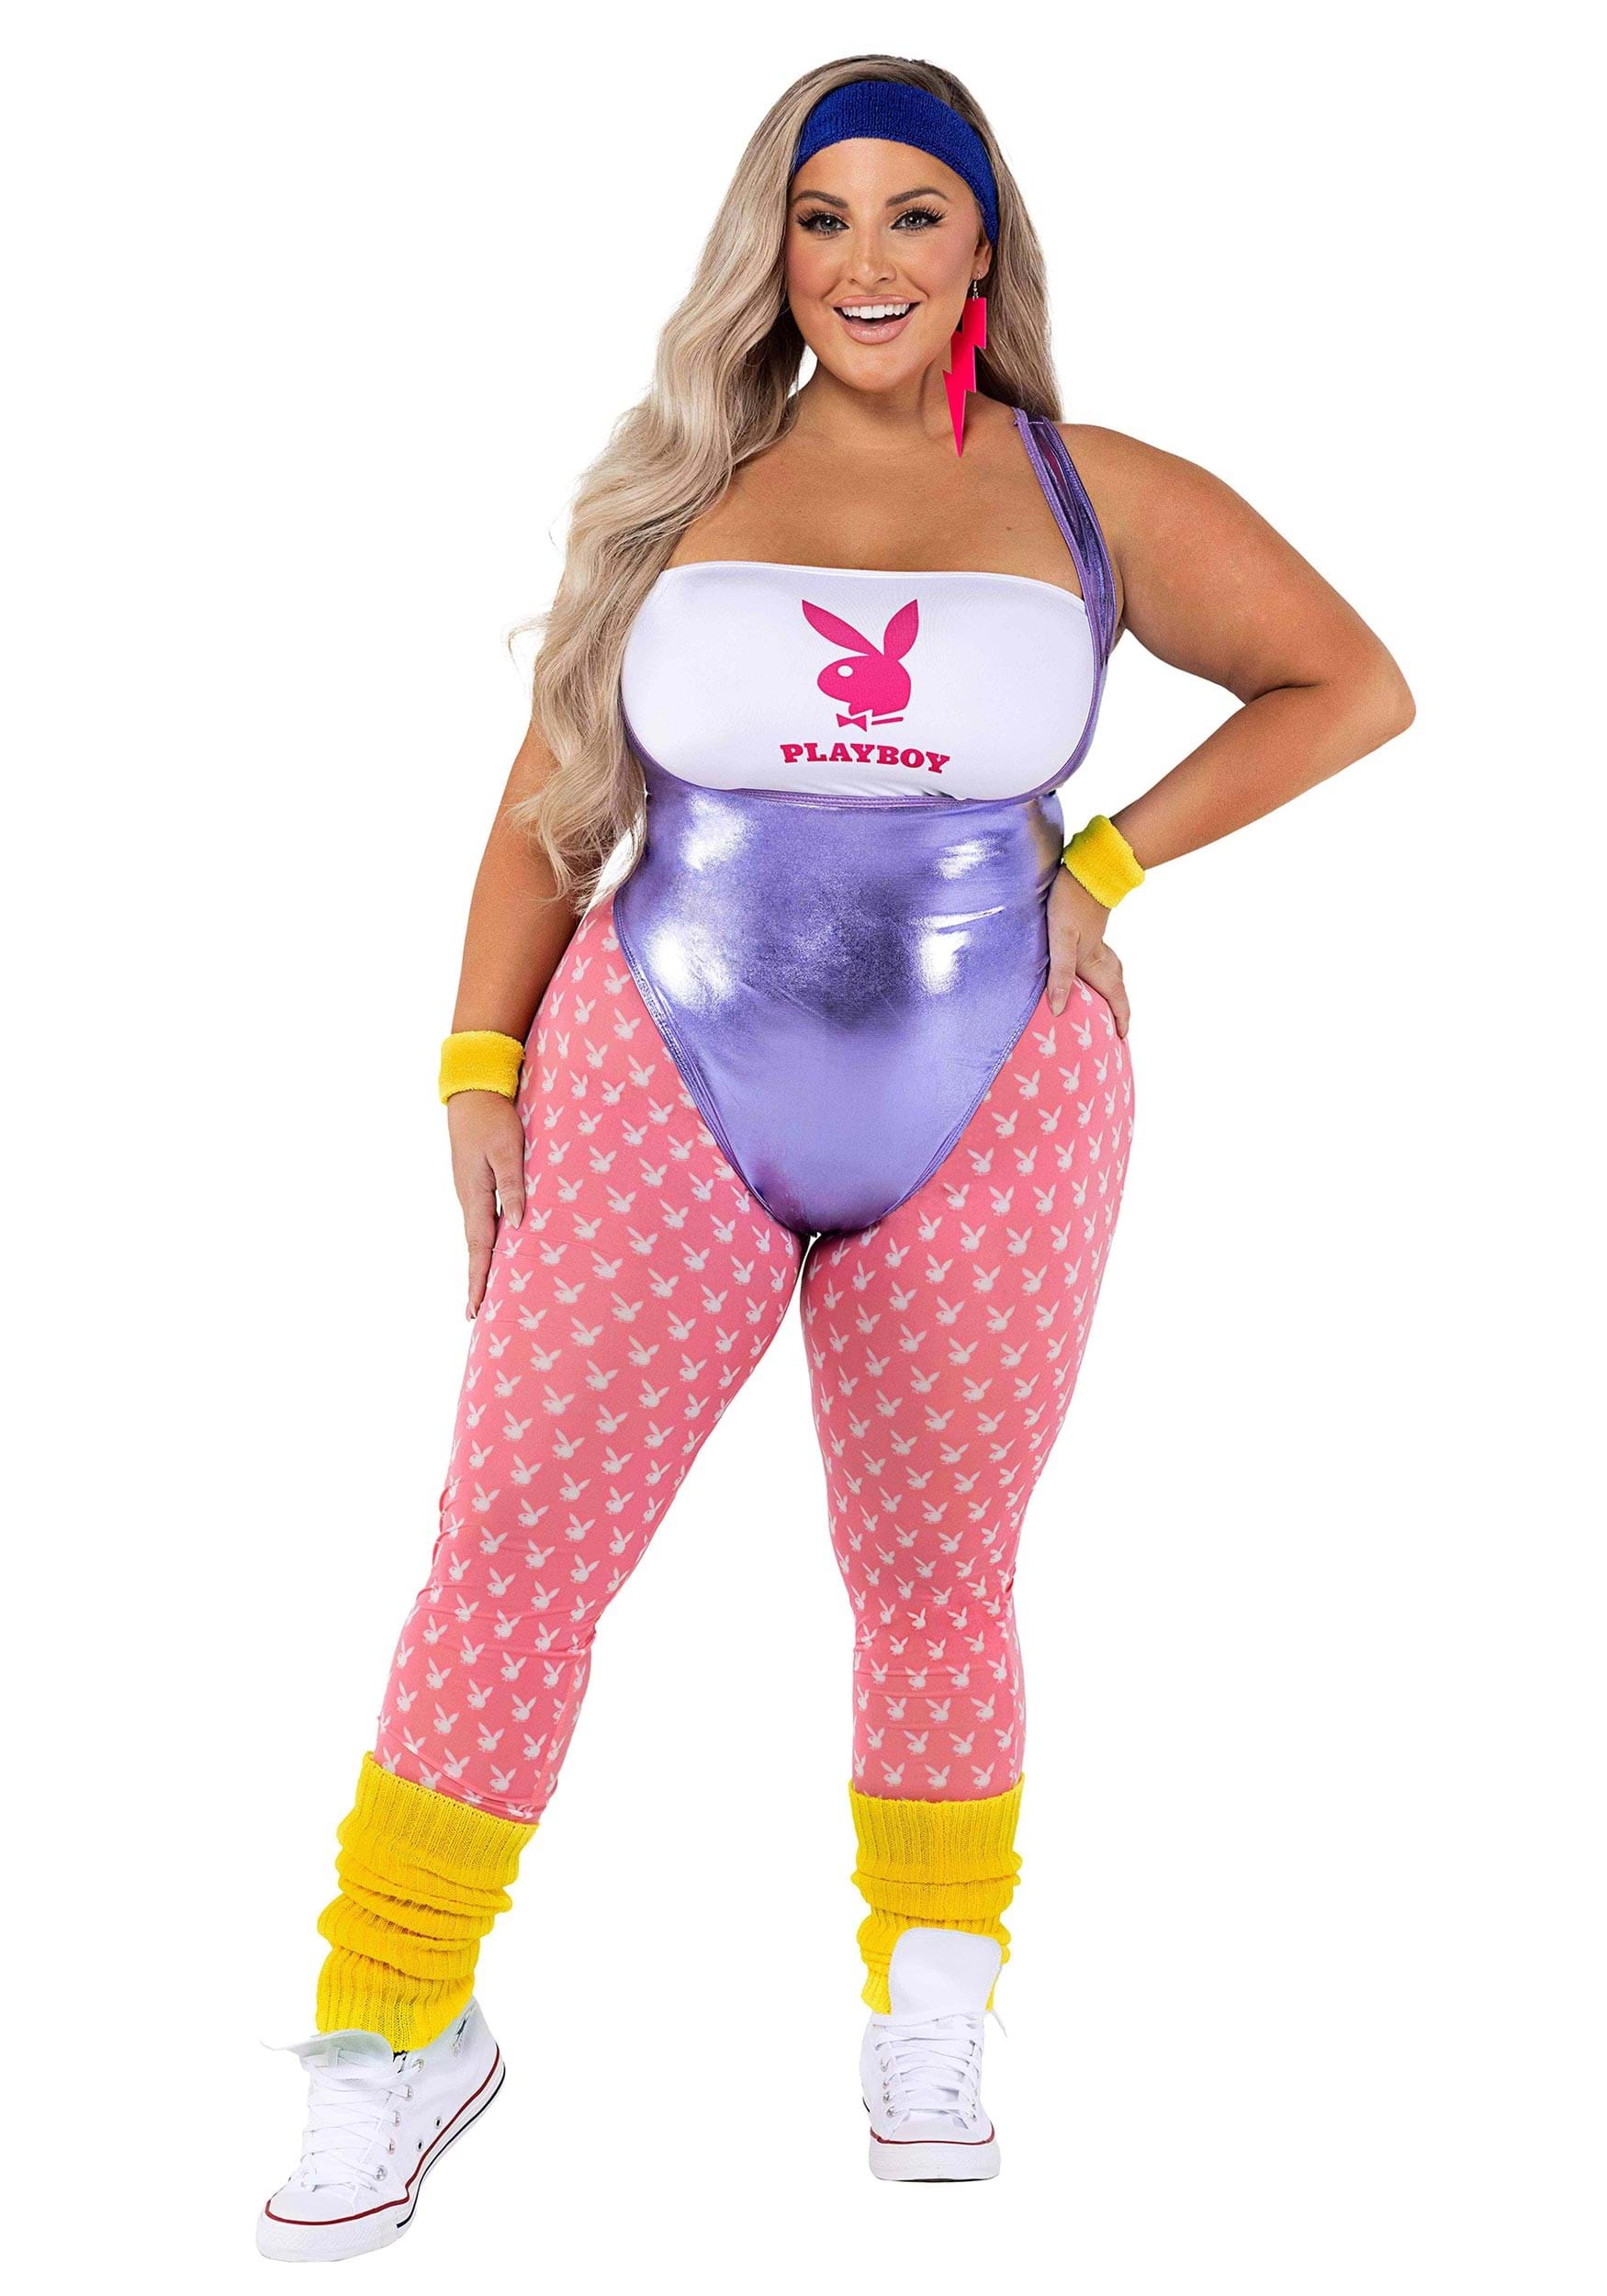 Women's Plus Size Playboy 80s Workout Costume